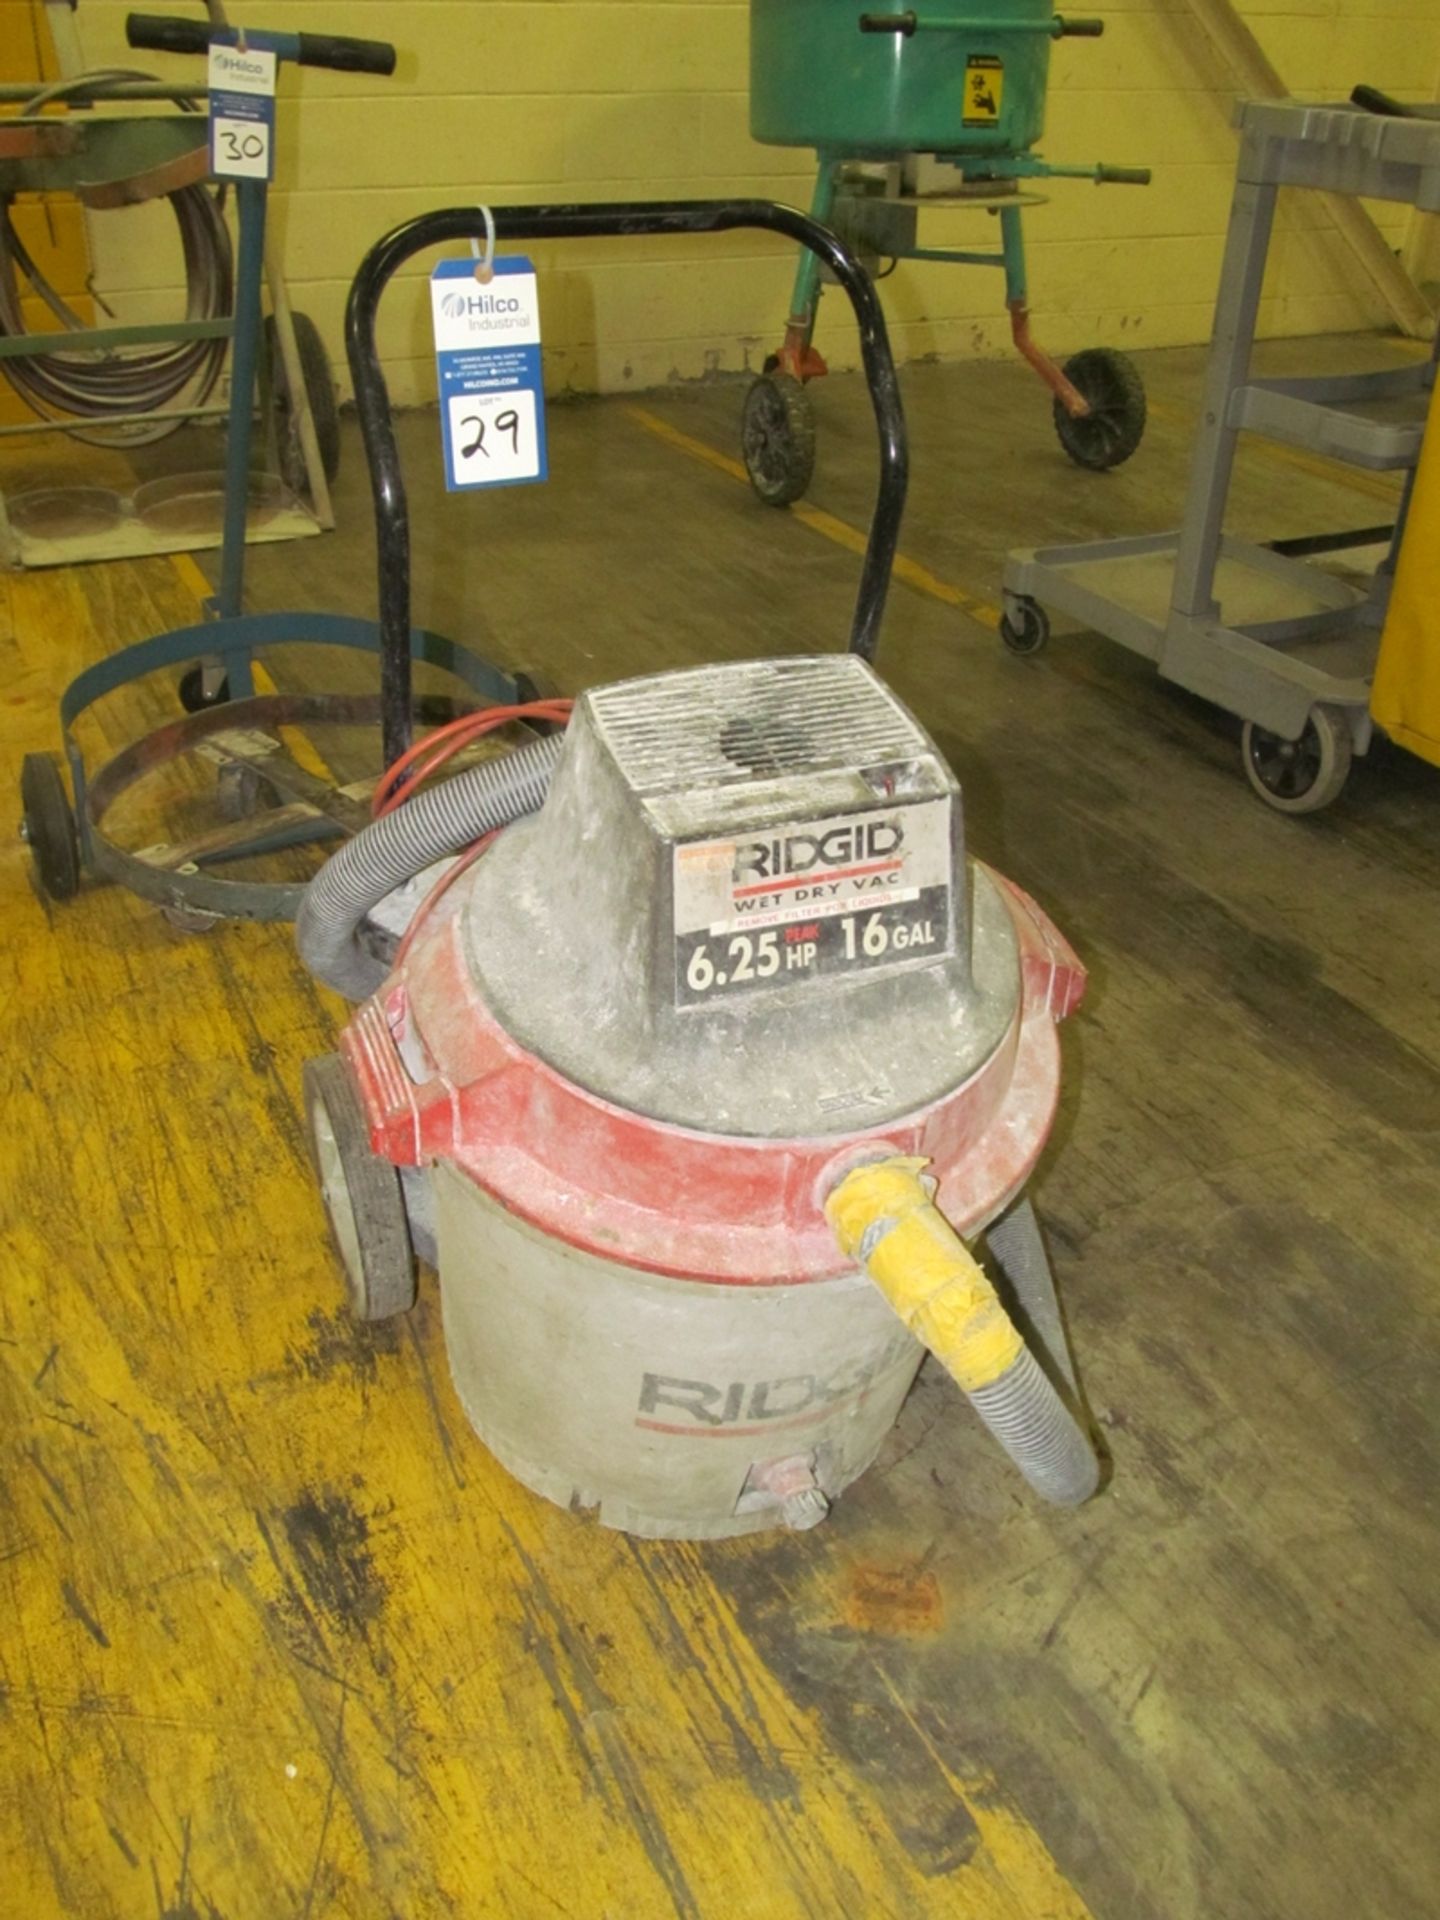 Ridgid 16 Gallon Wet-Dry Vacuum